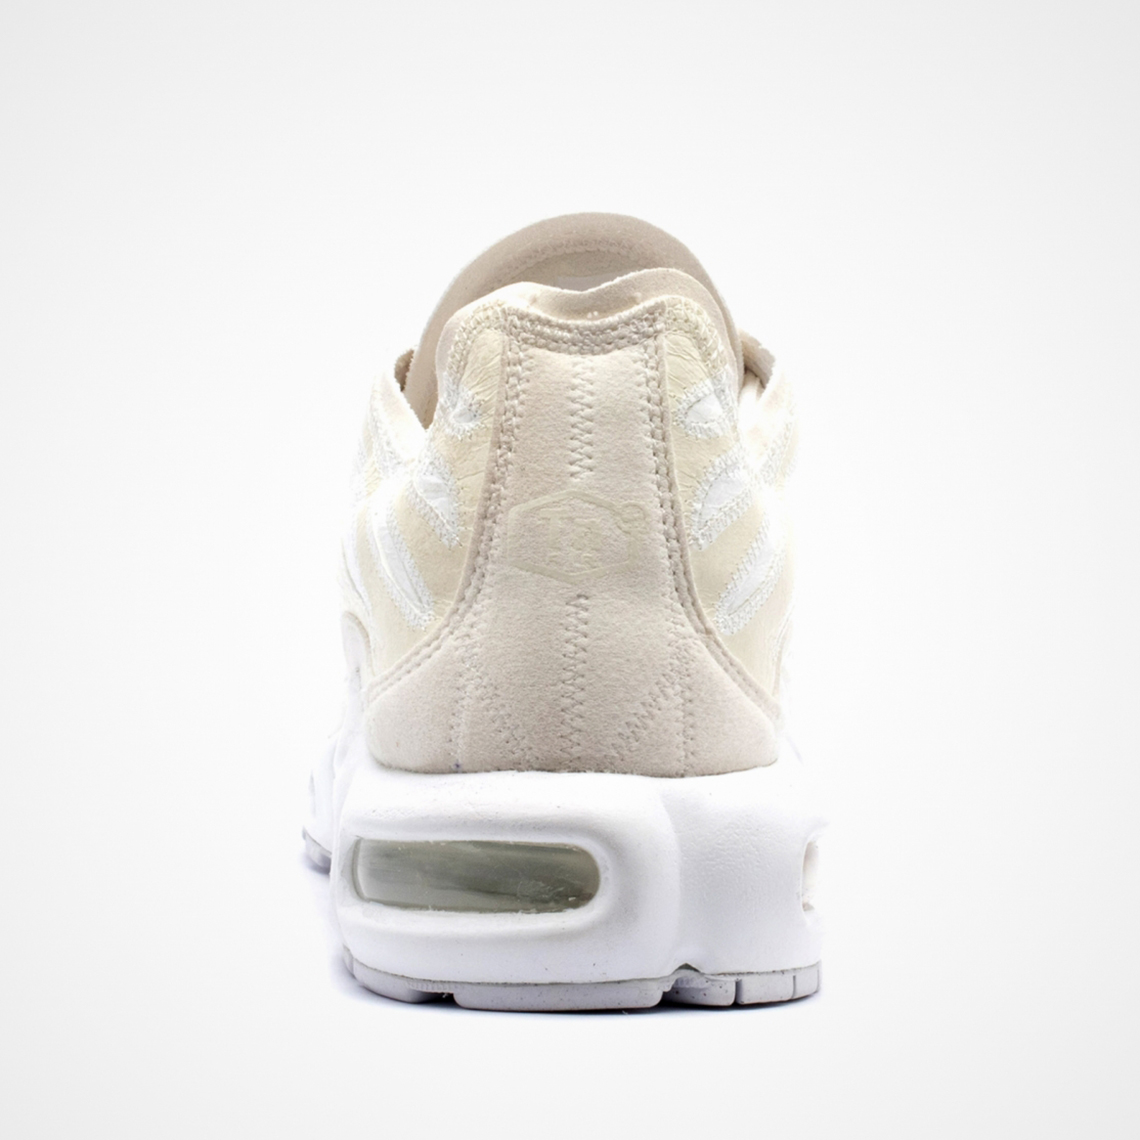 Eh Derecho límite Nike Air Max Plus Deconstructed Beige CD0882-100 Release Date |  SneakerNews.com